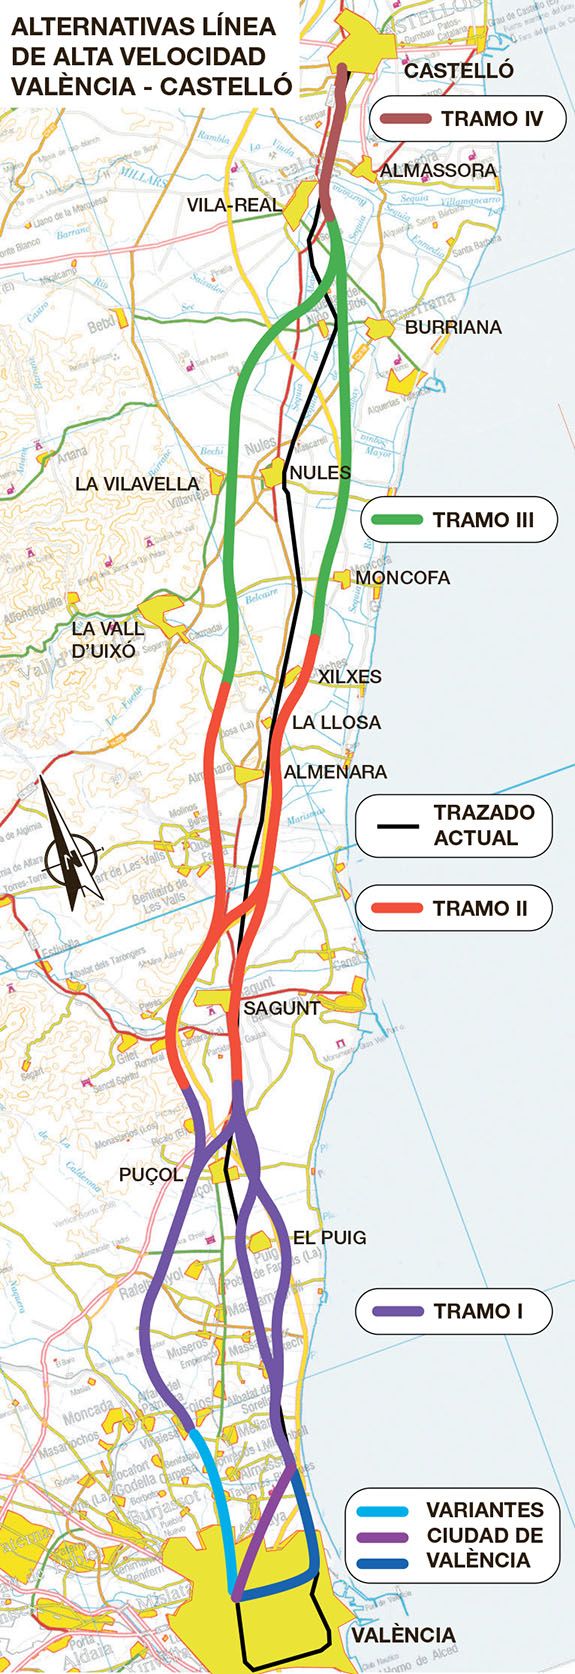 Alternativas línea de alta velocidad València-Castelló